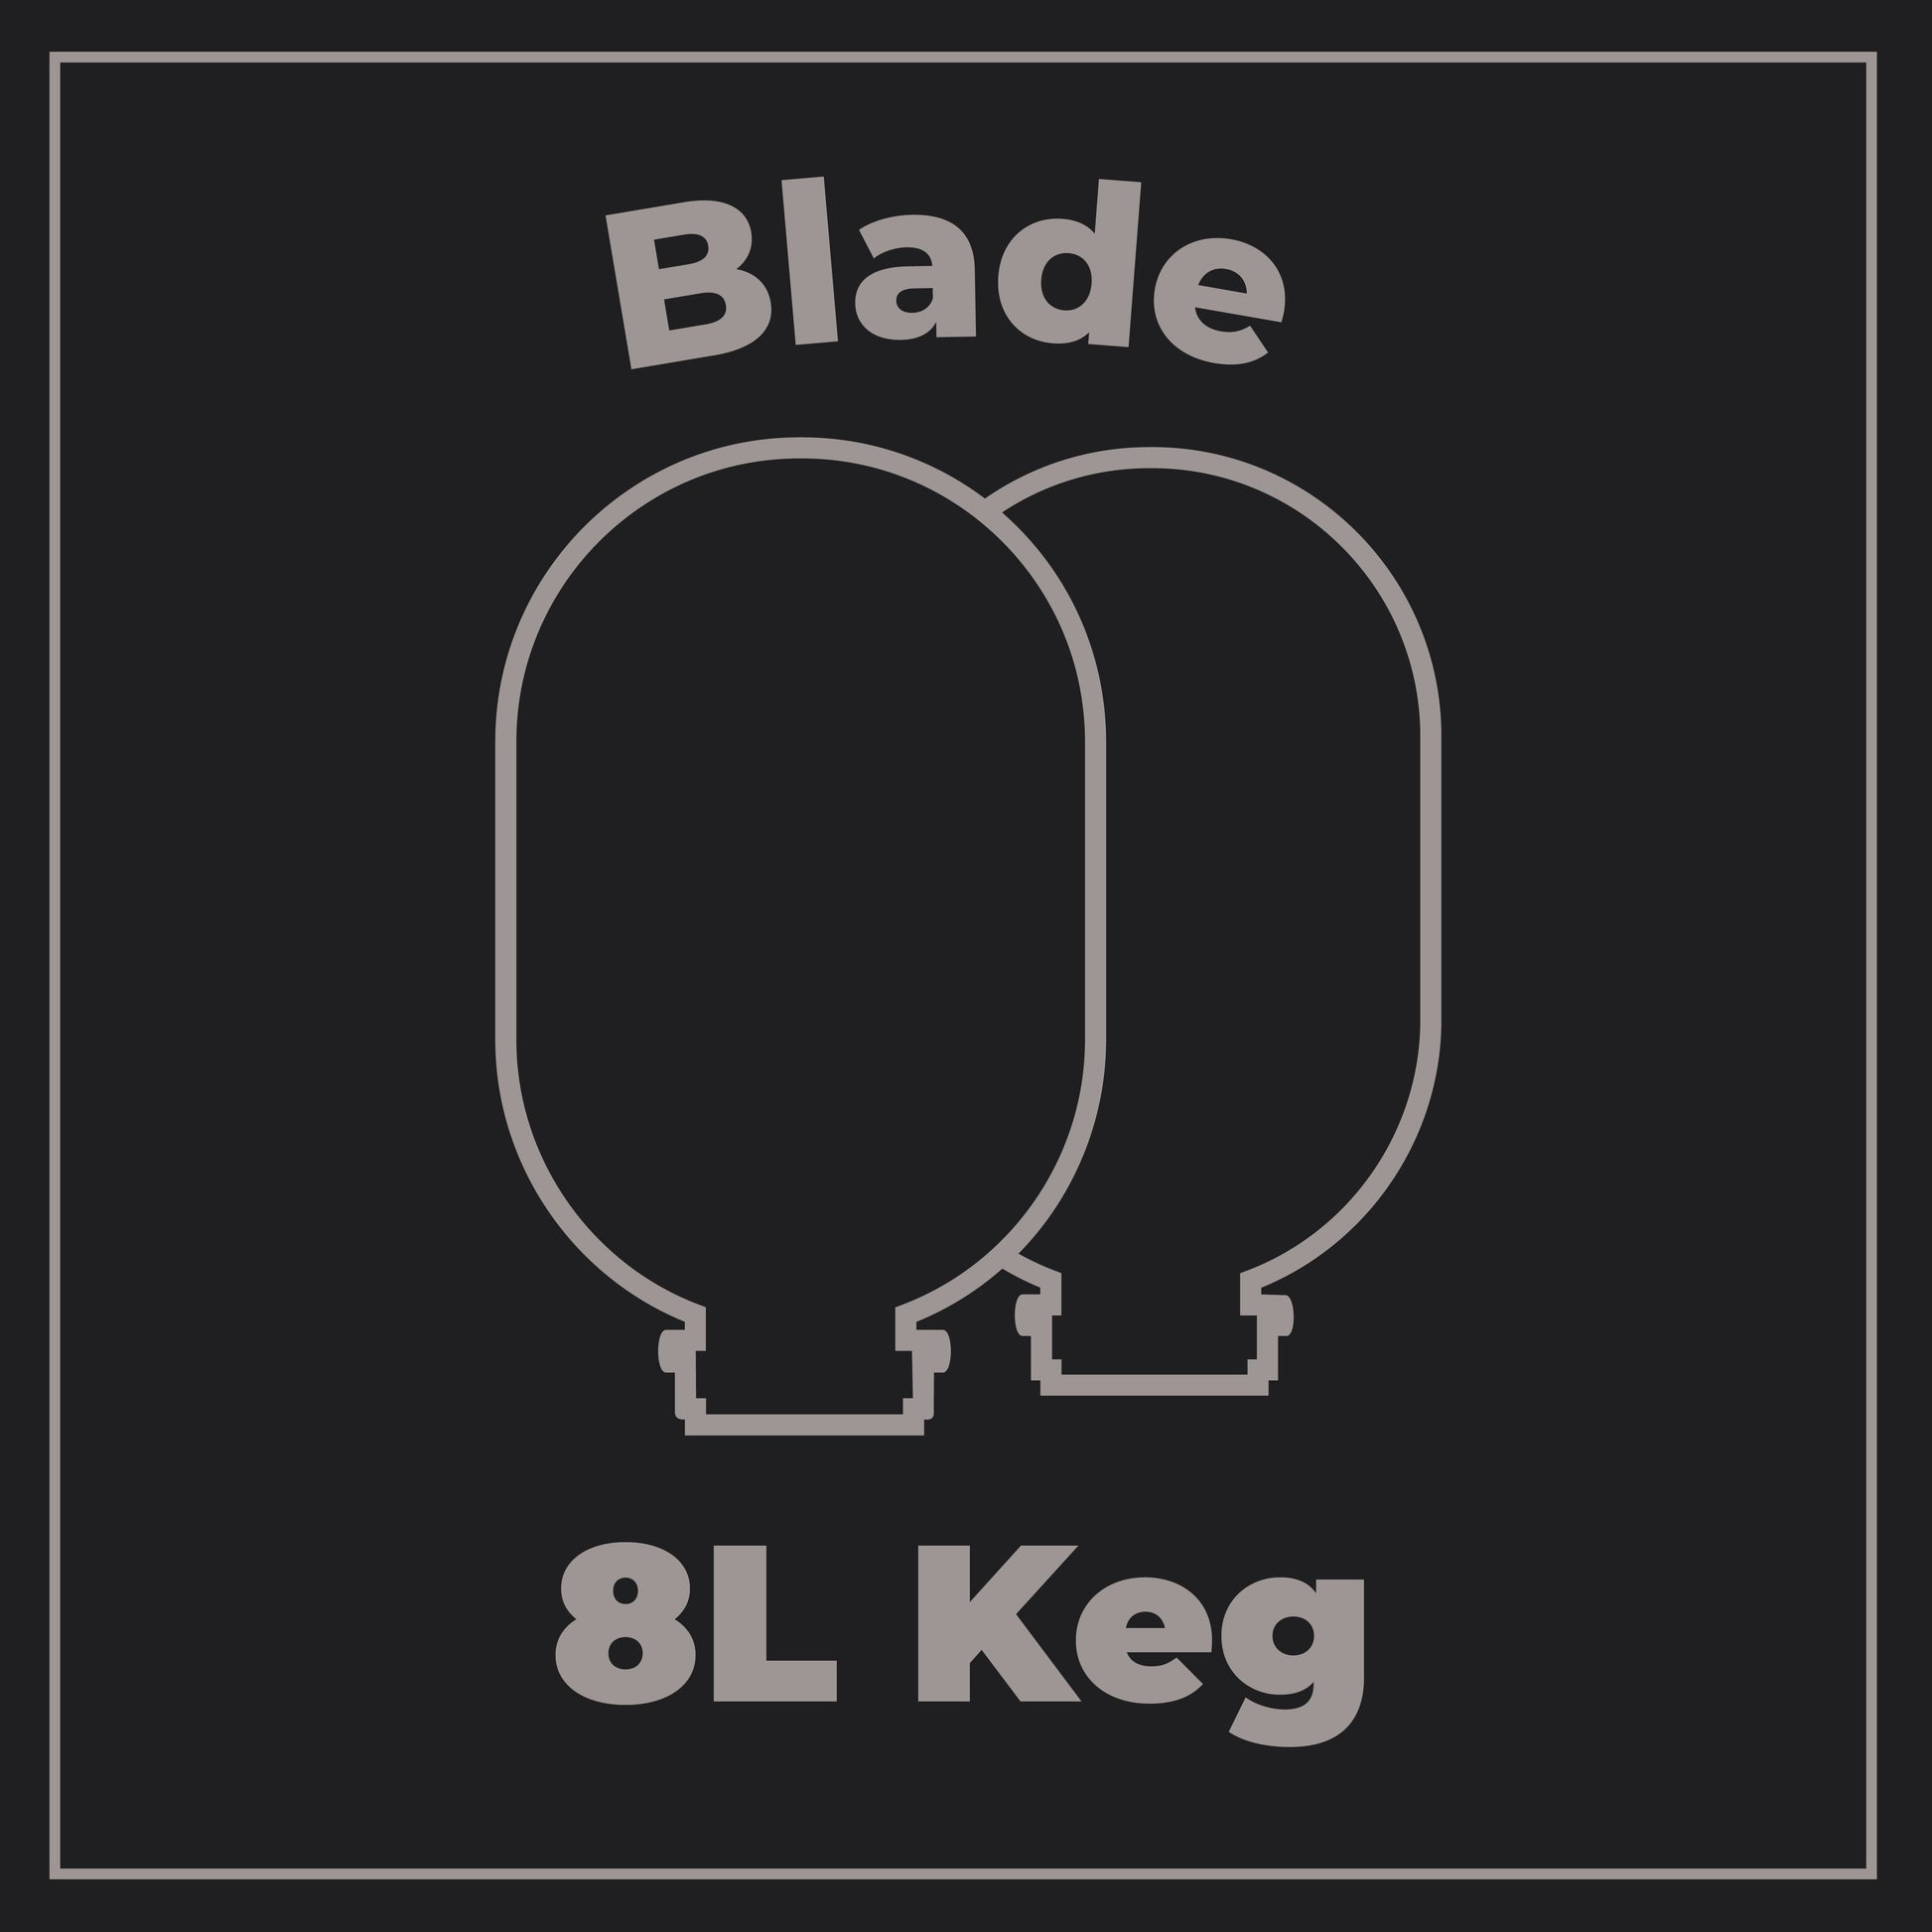 Gosser Stifts-Zwickl Hell Blade Keg – Lager – 5.2% ABV - 8L Blade Keg